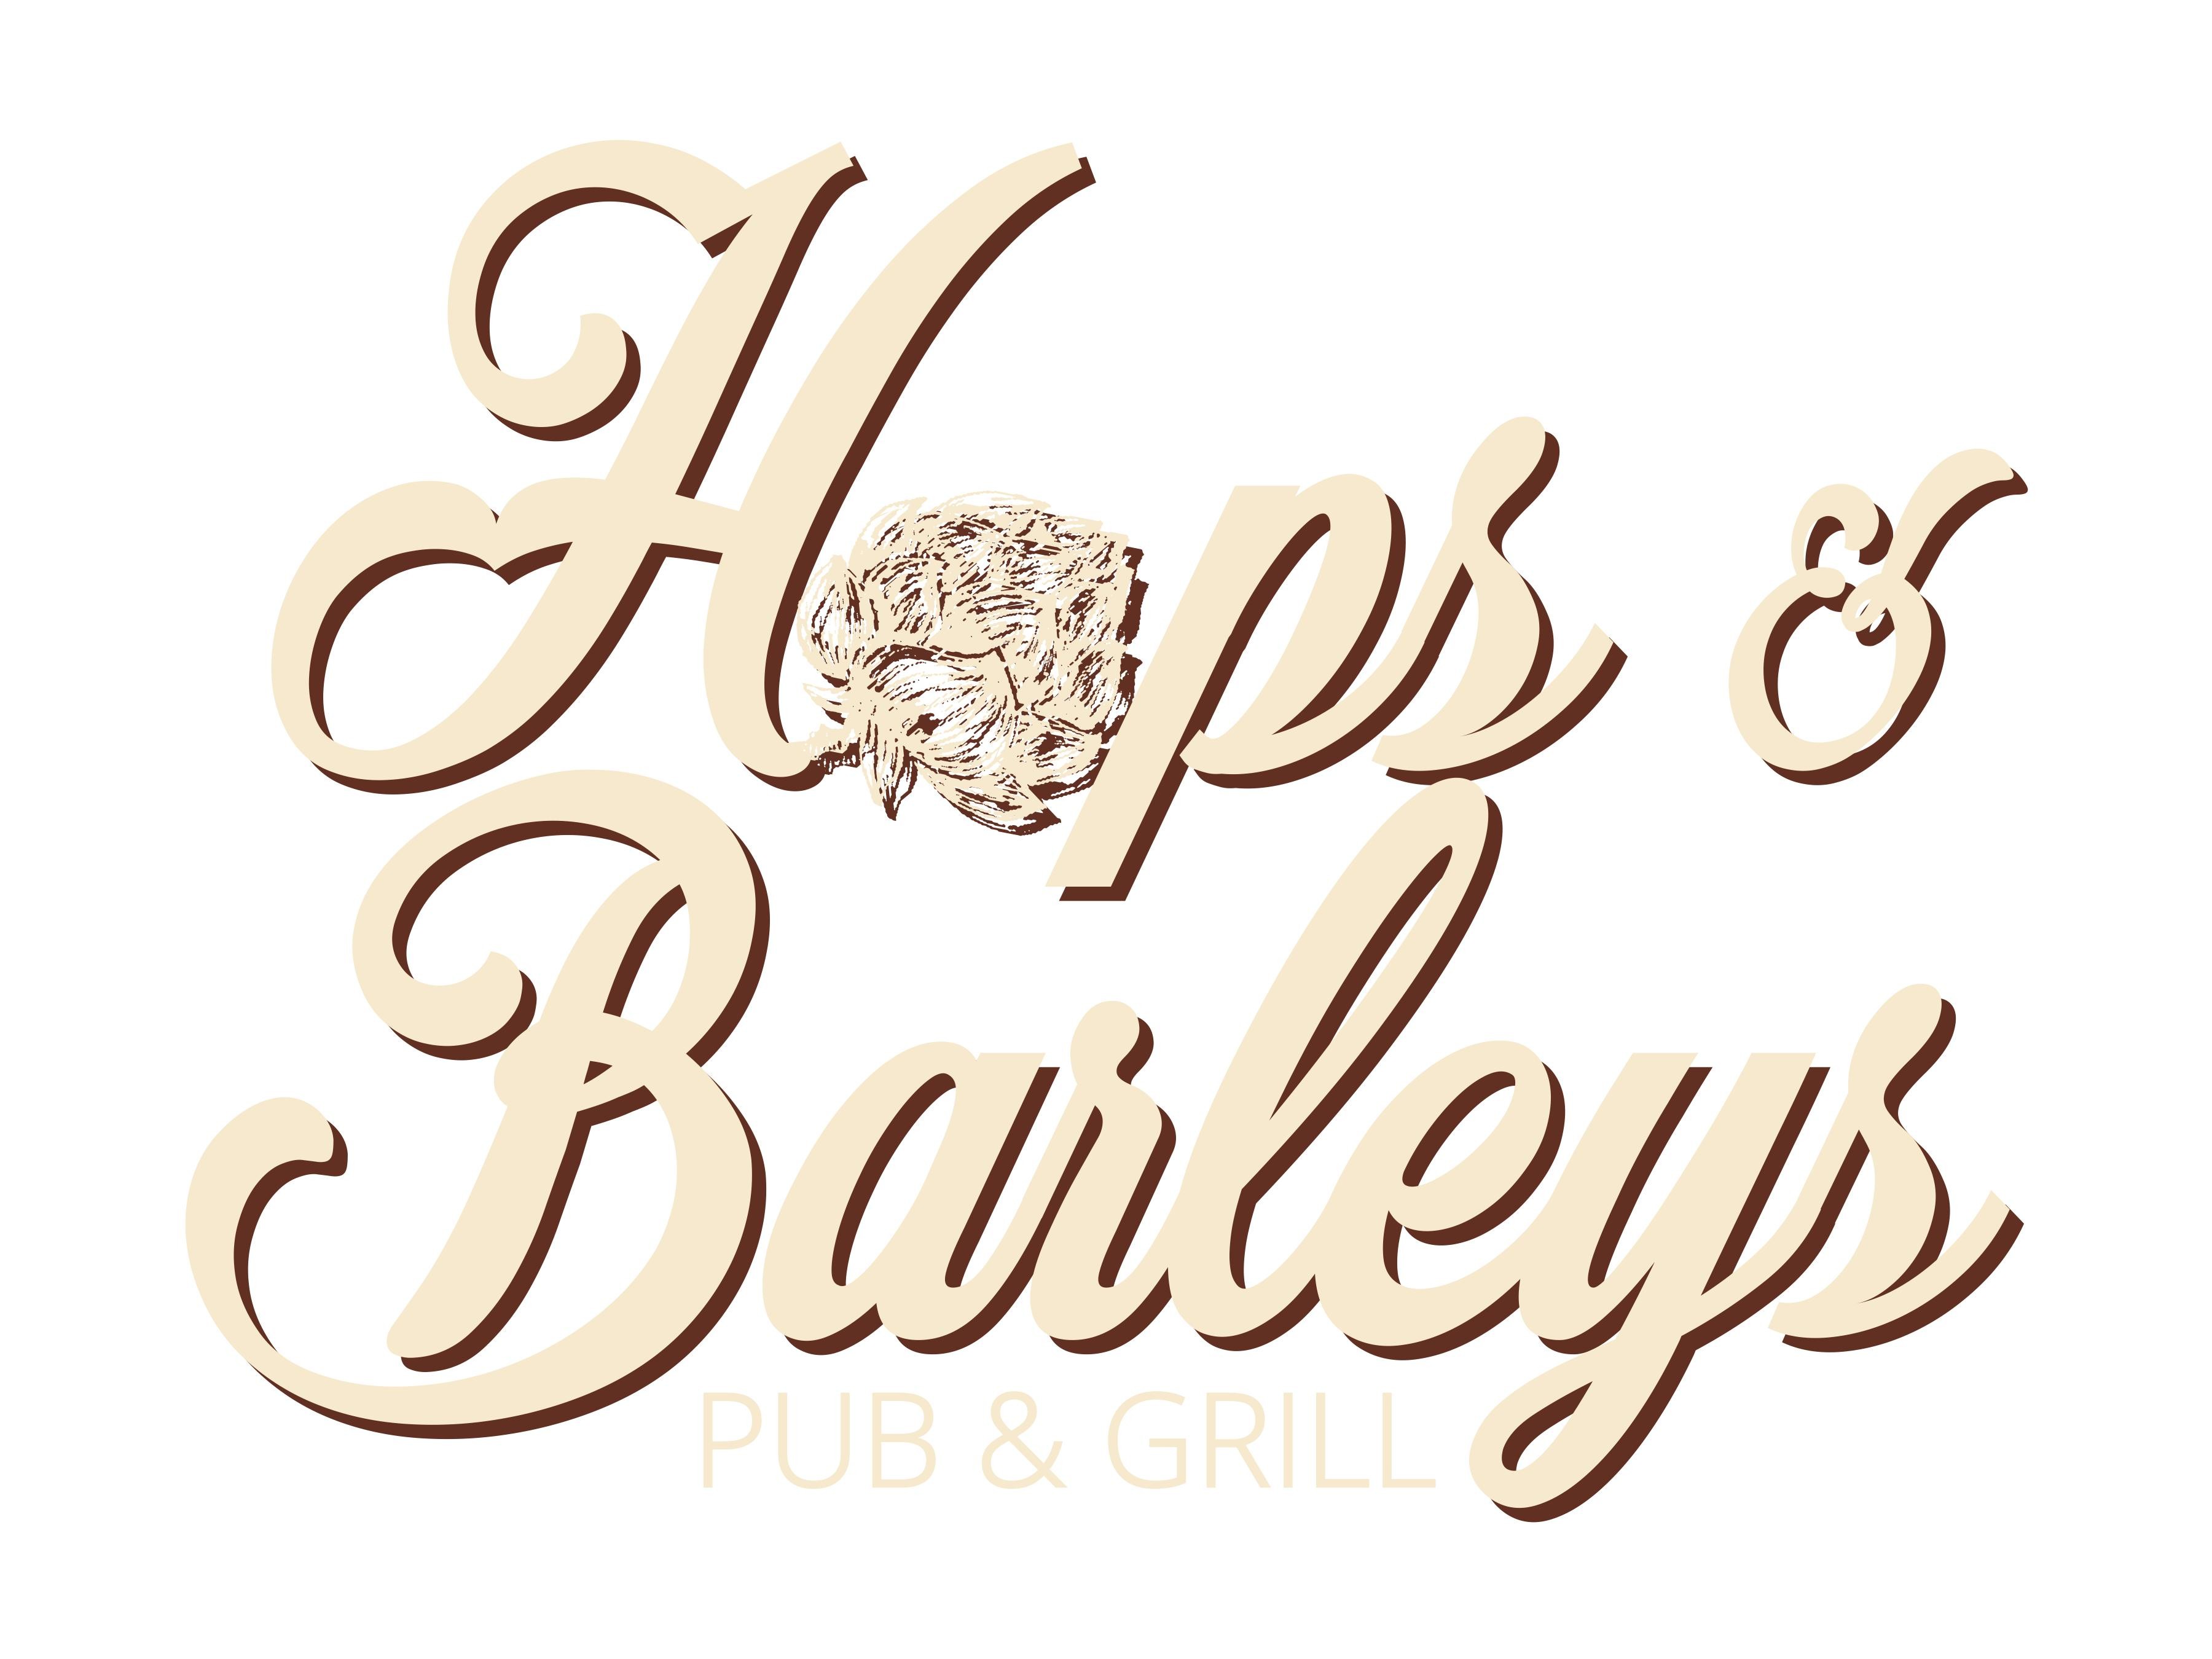 Hops & Barleys